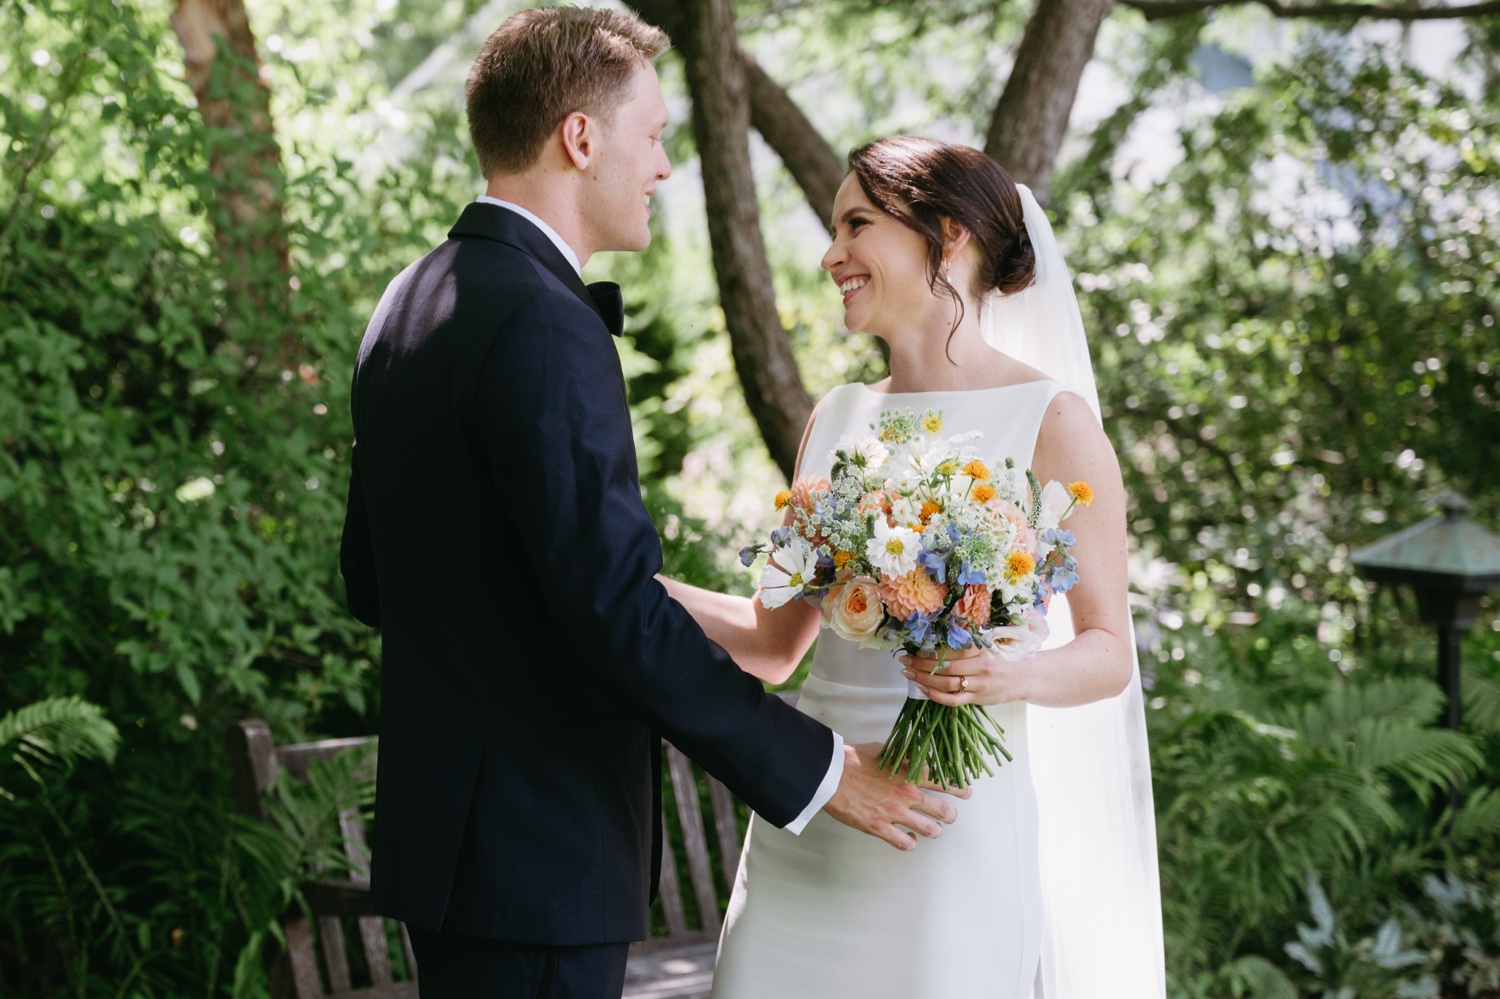 woodstock inn wedding bride and groom first look florals bouquet